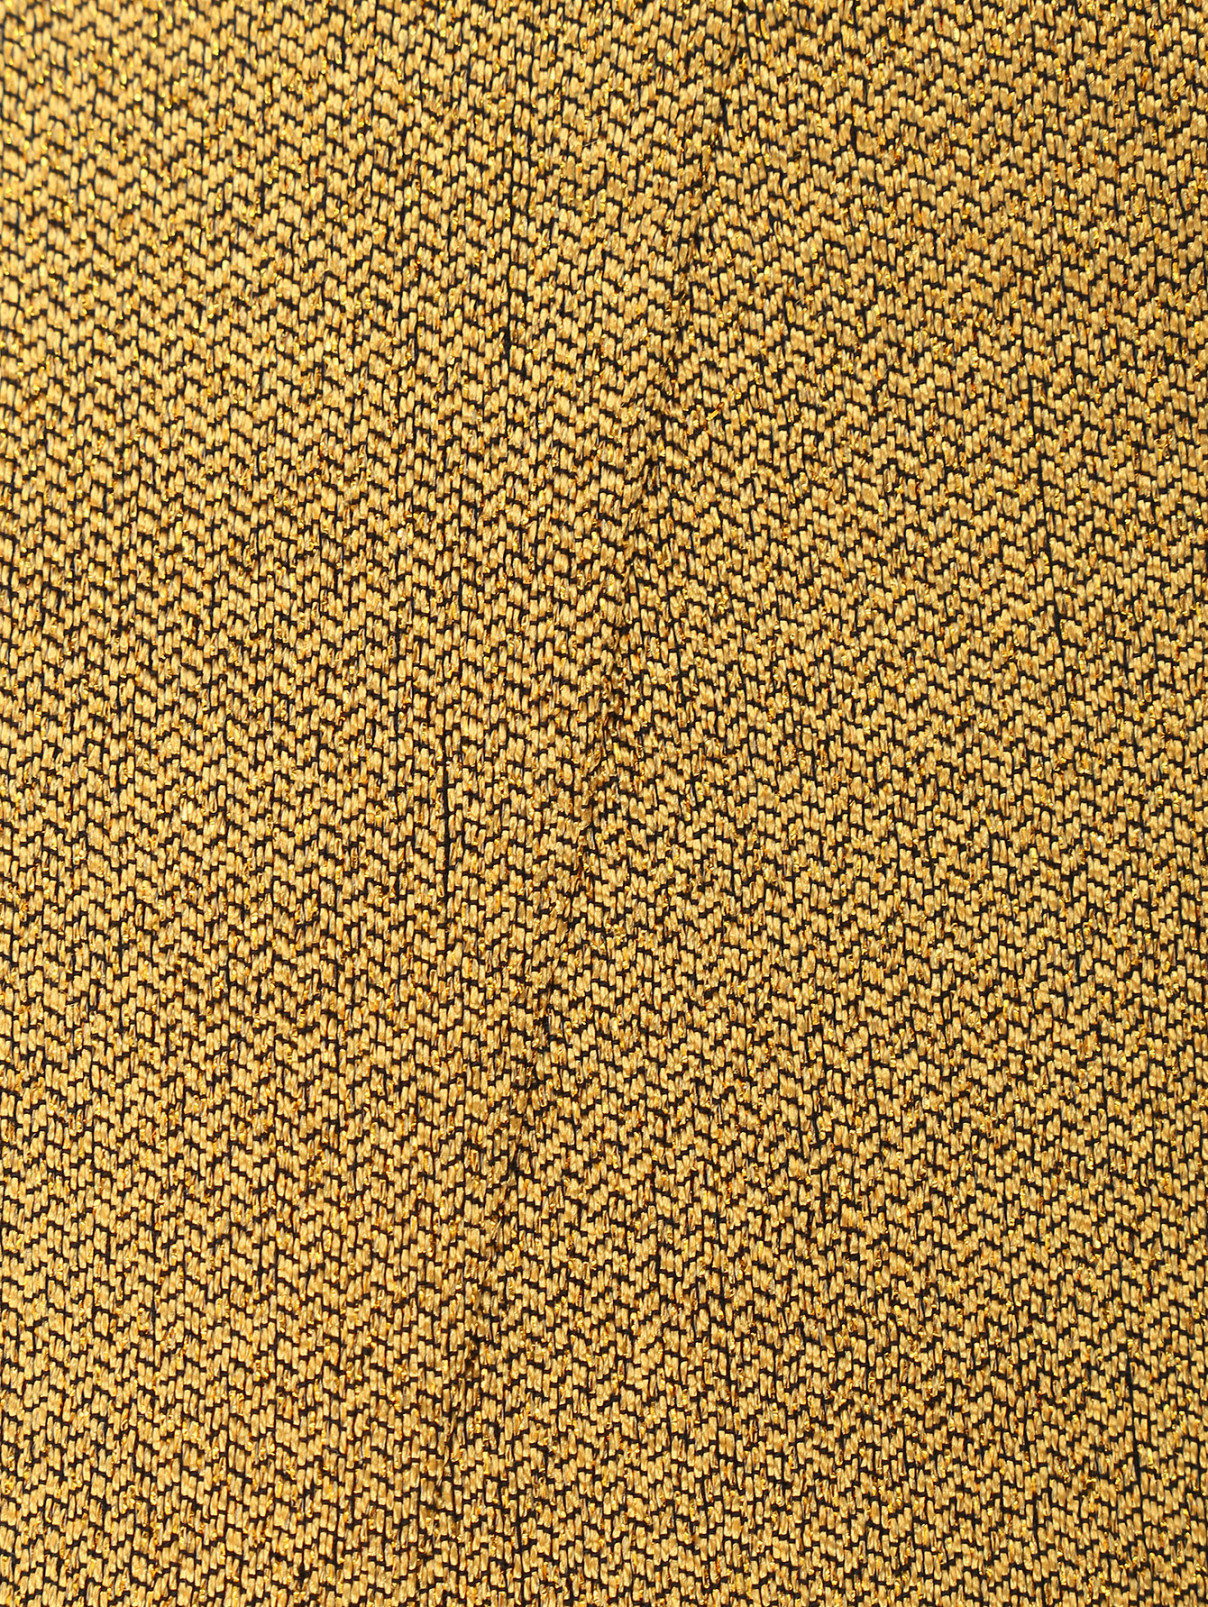 Юбка-карандаш на молнии Safiyaa  –  Деталь1  – Цвет:  Золотой